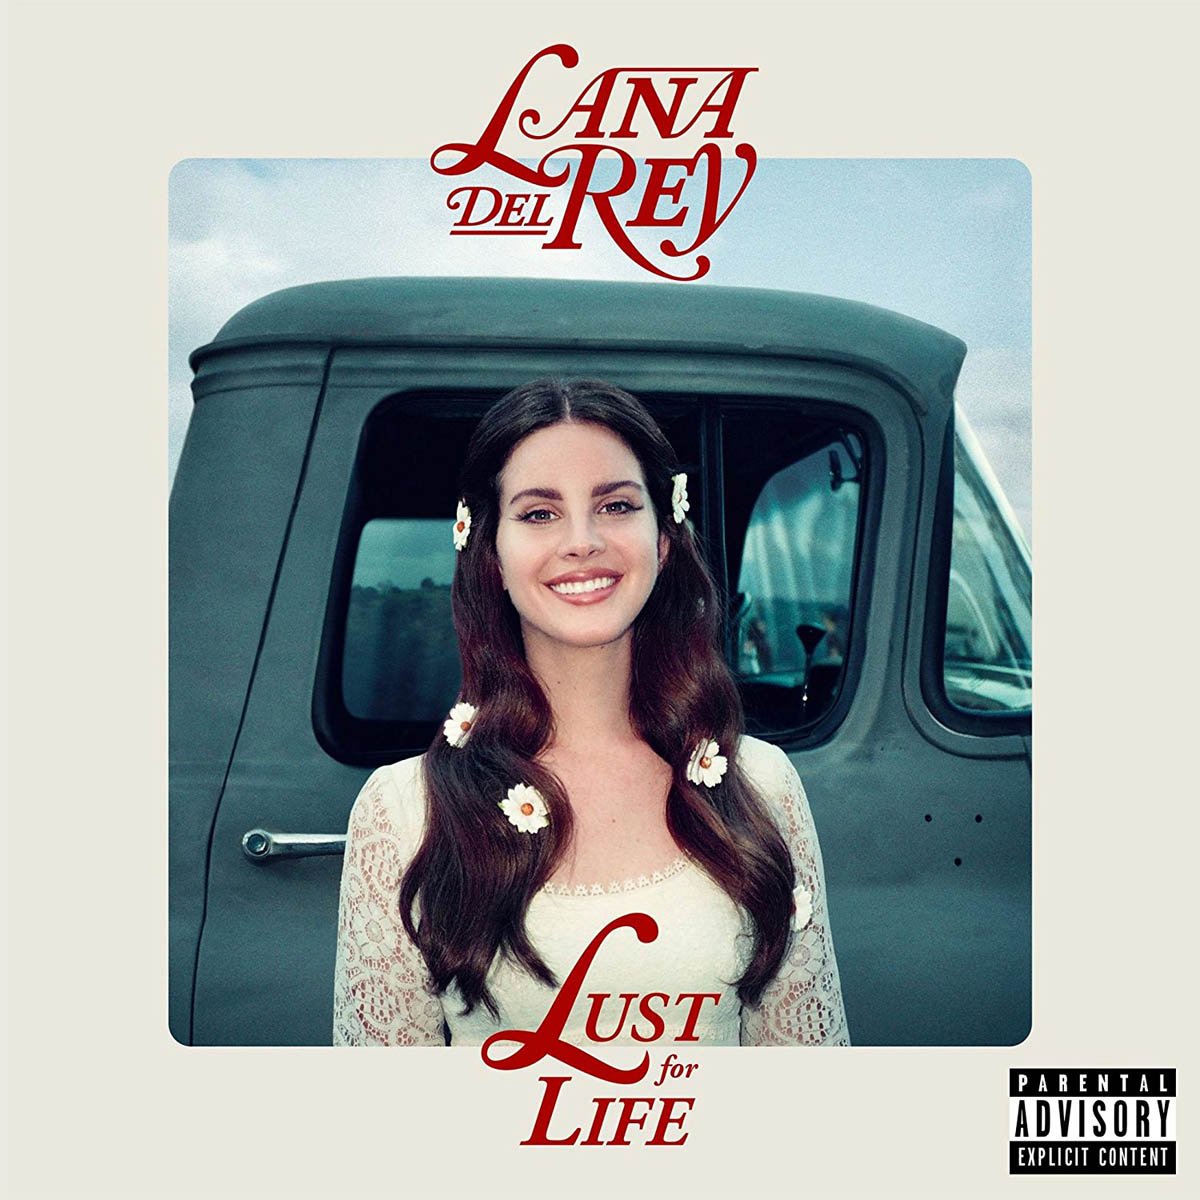 Cd Lana Dey Rey Lust For Life